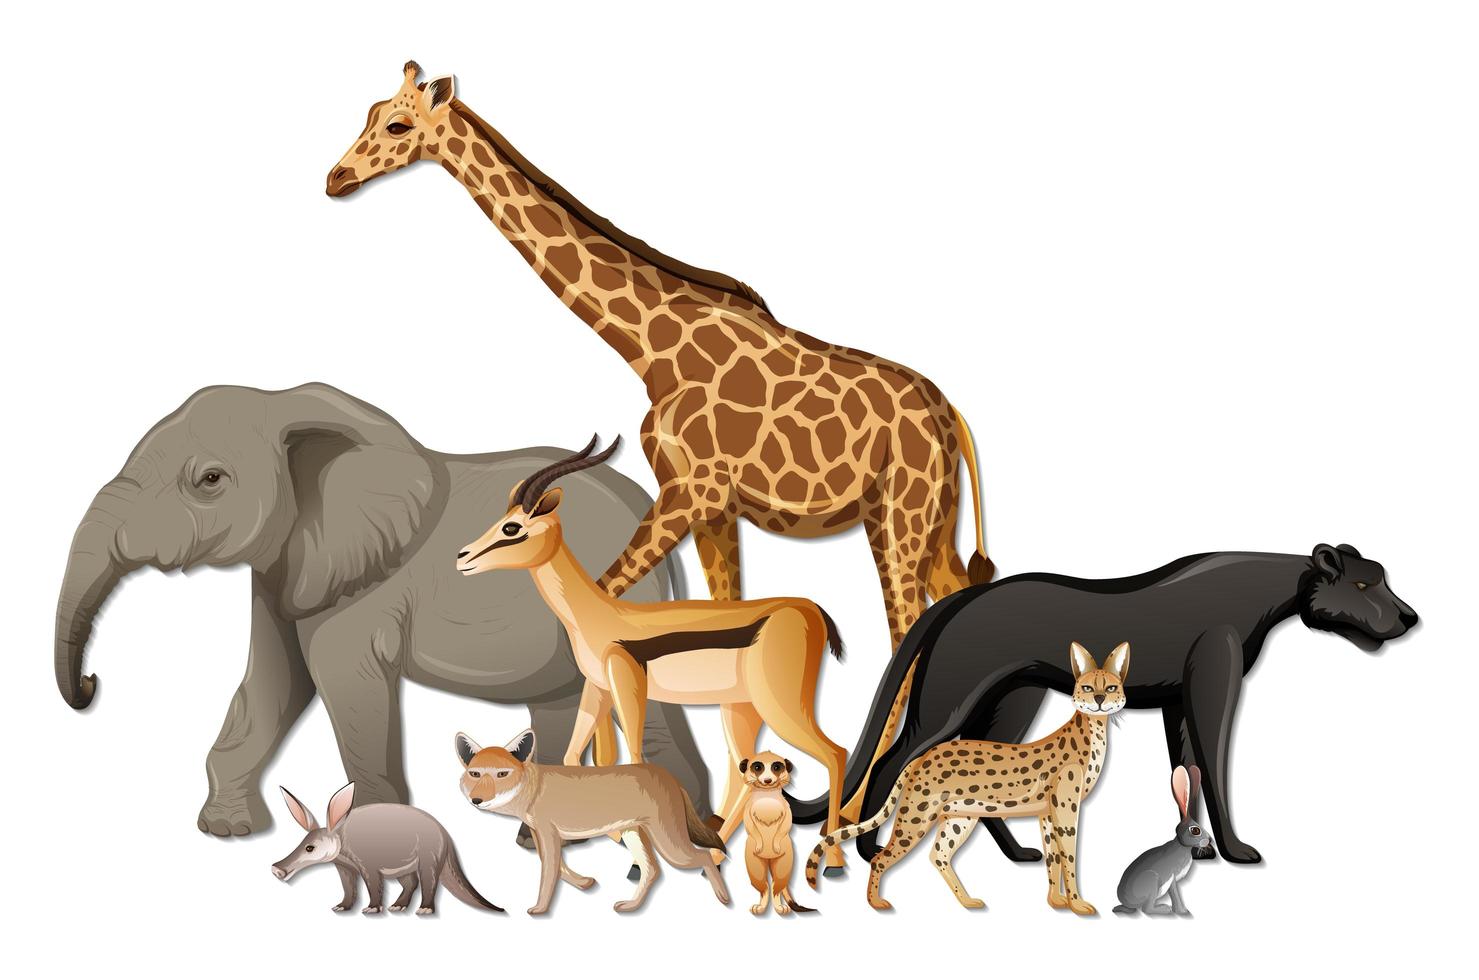 grupp av vilda afrikanska djur på vit bakgrund vektor